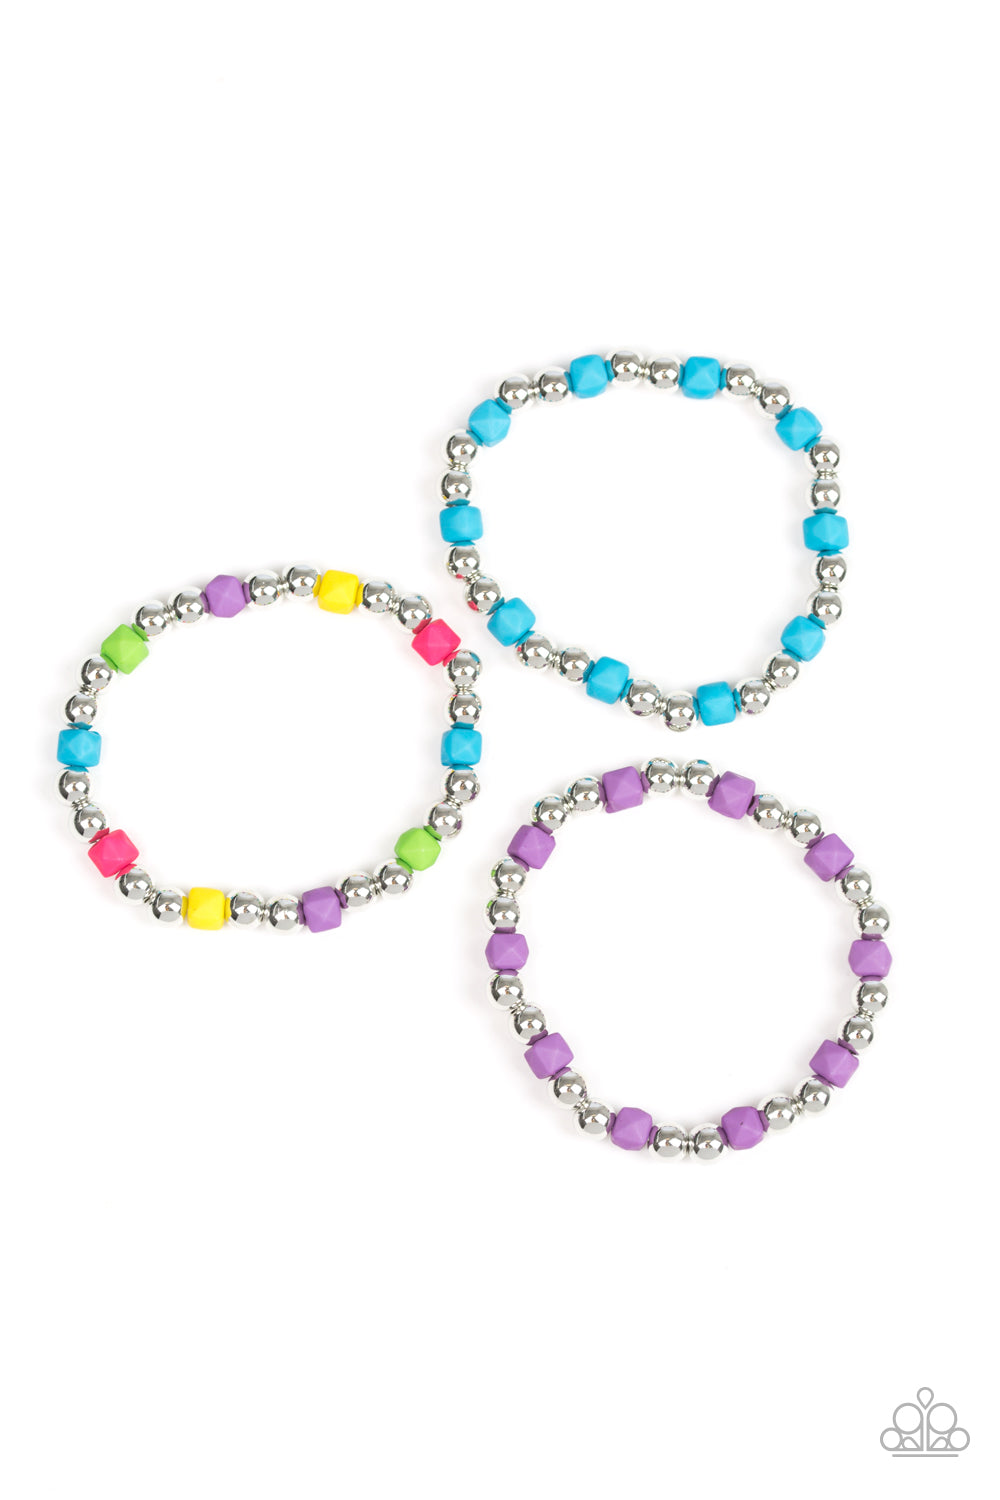 Paparazzi Starlet Shimmer Bracelets - 10 - Blue, Multi & Purple Beads - $5 Jewelry With Ashley Swint